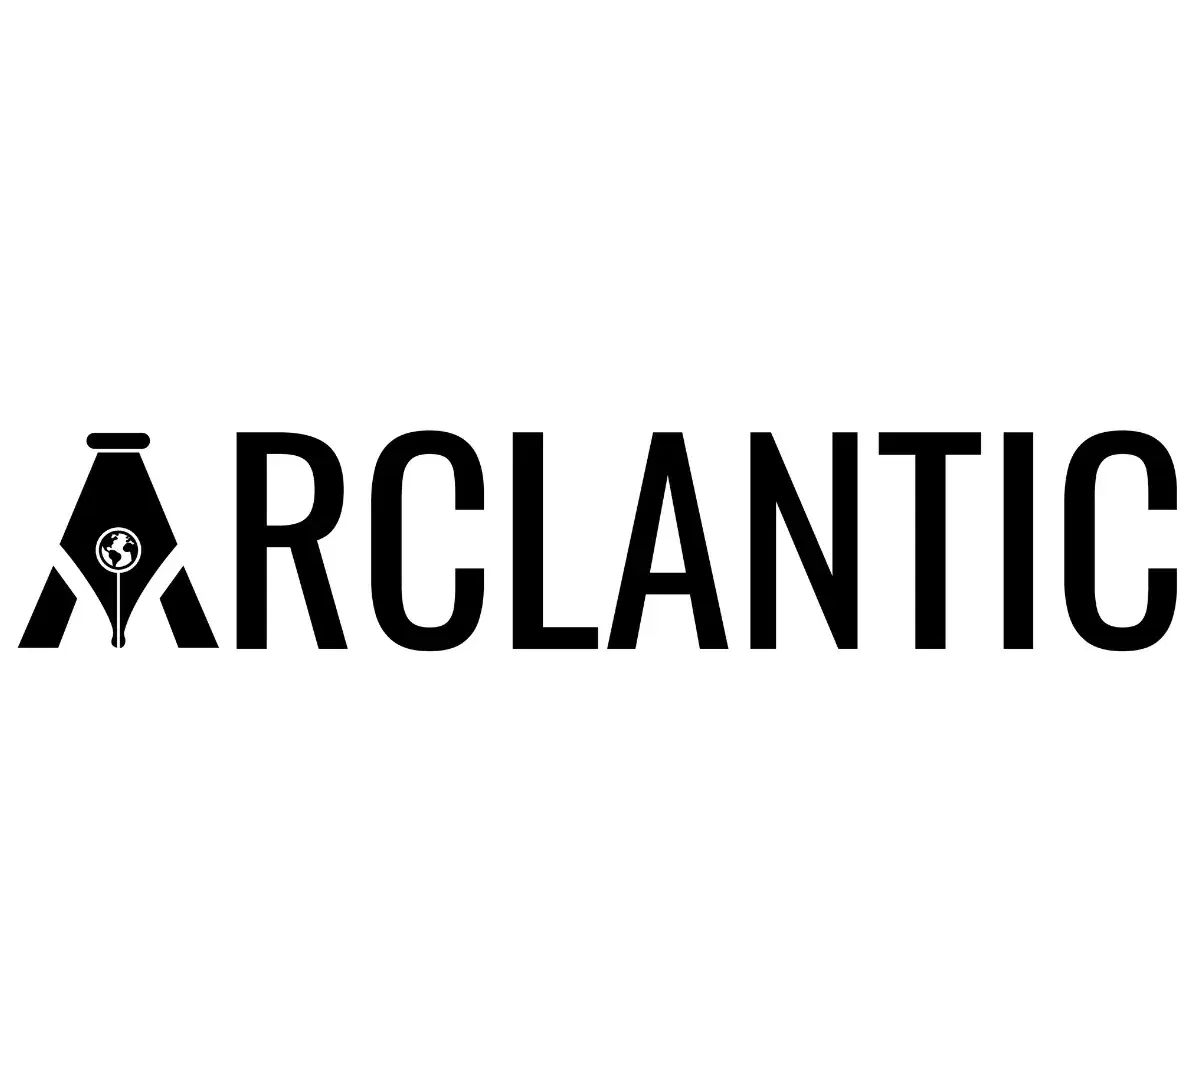 Arclantic